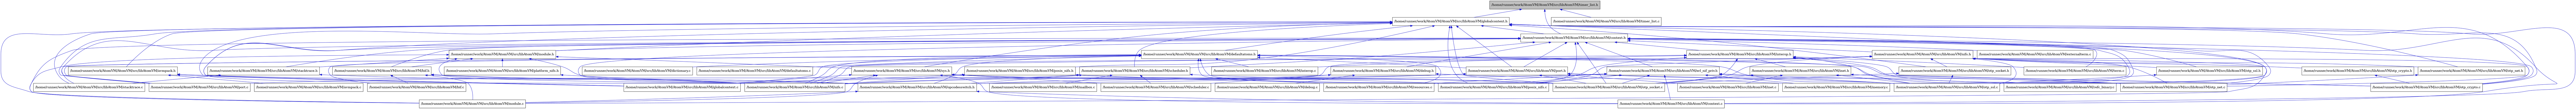 digraph {
    graph [bgcolor="#00000000"]
    node [shape=rectangle style=filled fillcolor="#FFFFFF" font=Helvetica padding=2]
    edge [color="#1414CE"]
    "4" [label="/home/runner/work/AtomVM/AtomVM/src/libAtomVM/bif.c" tooltip="/home/runner/work/AtomVM/AtomVM/src/libAtomVM/bif.c"]
    "47" [label="/home/runner/work/AtomVM/AtomVM/src/libAtomVM/dictionary.c" tooltip="/home/runner/work/AtomVM/AtomVM/src/libAtomVM/dictionary.c"]
    "3" [label="/home/runner/work/AtomVM/AtomVM/src/libAtomVM/bif.h" tooltip="/home/runner/work/AtomVM/AtomVM/src/libAtomVM/bif.h"]
    "29" [label="/home/runner/work/AtomVM/AtomVM/src/libAtomVM/platform_nifs.h" tooltip="/home/runner/work/AtomVM/AtomVM/src/libAtomVM/platform_nifs.h"]
    "17" [label="/home/runner/work/AtomVM/AtomVM/src/libAtomVM/posix_nifs.c" tooltip="/home/runner/work/AtomVM/AtomVM/src/libAtomVM/posix_nifs.c"]
    "48" [label="/home/runner/work/AtomVM/AtomVM/src/libAtomVM/posix_nifs.h" tooltip="/home/runner/work/AtomVM/AtomVM/src/libAtomVM/posix_nifs.h"]
    "46" [label="/home/runner/work/AtomVM/AtomVM/src/libAtomVM/defaultatoms.c" tooltip="/home/runner/work/AtomVM/AtomVM/src/libAtomVM/defaultatoms.c"]
    "45" [label="/home/runner/work/AtomVM/AtomVM/src/libAtomVM/defaultatoms.h" tooltip="/home/runner/work/AtomVM/AtomVM/src/libAtomVM/defaultatoms.h"]
    "23" [label="/home/runner/work/AtomVM/AtomVM/src/libAtomVM/inet.c" tooltip="/home/runner/work/AtomVM/AtomVM/src/libAtomVM/inet.c"]
    "22" [label="/home/runner/work/AtomVM/AtomVM/src/libAtomVM/inet.h" tooltip="/home/runner/work/AtomVM/AtomVM/src/libAtomVM/inet.h"]
    "12" [label="/home/runner/work/AtomVM/AtomVM/src/libAtomVM/scheduler.c" tooltip="/home/runner/work/AtomVM/AtomVM/src/libAtomVM/scheduler.c"]
    "40" [label="/home/runner/work/AtomVM/AtomVM/src/libAtomVM/scheduler.h" tooltip="/home/runner/work/AtomVM/AtomVM/src/libAtomVM/scheduler.h"]
    "8" [label="/home/runner/work/AtomVM/AtomVM/src/libAtomVM/context.c" tooltip="/home/runner/work/AtomVM/AtomVM/src/libAtomVM/context.c"]
    "2" [label="/home/runner/work/AtomVM/AtomVM/src/libAtomVM/context.h" tooltip="/home/runner/work/AtomVM/AtomVM/src/libAtomVM/context.h"]
    "38" [label="/home/runner/work/AtomVM/AtomVM/src/libAtomVM/port.c" tooltip="/home/runner/work/AtomVM/AtomVM/src/libAtomVM/port.c"]
    "39" [label="/home/runner/work/AtomVM/AtomVM/src/libAtomVM/port.h" tooltip="/home/runner/work/AtomVM/AtomVM/src/libAtomVM/port.h"]
    "31" [label="/home/runner/work/AtomVM/AtomVM/src/libAtomVM/stacktrace.c" tooltip="/home/runner/work/AtomVM/AtomVM/src/libAtomVM/stacktrace.c"]
    "30" [label="/home/runner/work/AtomVM/AtomVM/src/libAtomVM/stacktrace.h" tooltip="/home/runner/work/AtomVM/AtomVM/src/libAtomVM/stacktrace.h"]
    "18" [label="/home/runner/work/AtomVM/AtomVM/src/libAtomVM/refc_binary.c" tooltip="/home/runner/work/AtomVM/AtomVM/src/libAtomVM/refc_binary.c"]
    "41" [label="/home/runner/work/AtomVM/AtomVM/src/libAtomVM/mailbox.c" tooltip="/home/runner/work/AtomVM/AtomVM/src/libAtomVM/mailbox.c"]
    "5" [label="/home/runner/work/AtomVM/AtomVM/src/libAtomVM/module.c" tooltip="/home/runner/work/AtomVM/AtomVM/src/libAtomVM/module.c"]
    "28" [label="/home/runner/work/AtomVM/AtomVM/src/libAtomVM/module.h" tooltip="/home/runner/work/AtomVM/AtomVM/src/libAtomVM/module.h"]
    "44" [label="/home/runner/work/AtomVM/AtomVM/src/libAtomVM/avmpack.c" tooltip="/home/runner/work/AtomVM/AtomVM/src/libAtomVM/avmpack.c"]
    "43" [label="/home/runner/work/AtomVM/AtomVM/src/libAtomVM/avmpack.h" tooltip="/home/runner/work/AtomVM/AtomVM/src/libAtomVM/avmpack.h"]
    "27" [label="/home/runner/work/AtomVM/AtomVM/src/libAtomVM/term.c" tooltip="/home/runner/work/AtomVM/AtomVM/src/libAtomVM/term.c"]
    "25" [label="/home/runner/work/AtomVM/AtomVM/src/libAtomVM/interop.c" tooltip="/home/runner/work/AtomVM/AtomVM/src/libAtomVM/interop.c"]
    "16" [label="/home/runner/work/AtomVM/AtomVM/src/libAtomVM/otp_ssl.c" tooltip="/home/runner/work/AtomVM/AtomVM/src/libAtomVM/otp_ssl.c"]
    "21" [label="/home/runner/work/AtomVM/AtomVM/src/libAtomVM/interop.h" tooltip="/home/runner/work/AtomVM/AtomVM/src/libAtomVM/interop.h"]
    "37" [label="/home/runner/work/AtomVM/AtomVM/src/libAtomVM/otp_ssl.h" tooltip="/home/runner/work/AtomVM/AtomVM/src/libAtomVM/otp_ssl.h"]
    "19" [label="/home/runner/work/AtomVM/AtomVM/src/libAtomVM/resources.c" tooltip="/home/runner/work/AtomVM/AtomVM/src/libAtomVM/resources.c"]
    "26" [label="/home/runner/work/AtomVM/AtomVM/src/libAtomVM/otp_crypto.c" tooltip="/home/runner/work/AtomVM/AtomVM/src/libAtomVM/otp_crypto.c"]
    "34" [label="/home/runner/work/AtomVM/AtomVM/src/libAtomVM/otp_crypto.h" tooltip="/home/runner/work/AtomVM/AtomVM/src/libAtomVM/otp_crypto.h"]
    "24" [label="/home/runner/work/AtomVM/AtomVM/src/libAtomVM/otp_net.c" tooltip="/home/runner/work/AtomVM/AtomVM/src/libAtomVM/otp_net.c"]
    "35" [label="/home/runner/work/AtomVM/AtomVM/src/libAtomVM/otp_net.h" tooltip="/home/runner/work/AtomVM/AtomVM/src/libAtomVM/otp_net.h"]
    "13" [label="/home/runner/work/AtomVM/AtomVM/src/libAtomVM/erl_nif_priv.h" tooltip="/home/runner/work/AtomVM/AtomVM/src/libAtomVM/erl_nif_priv.h"]
    "32" [label="/home/runner/work/AtomVM/AtomVM/src/libAtomVM/sys.h" tooltip="/home/runner/work/AtomVM/AtomVM/src/libAtomVM/sys.h"]
    "6" [label="/home/runner/work/AtomVM/AtomVM/src/libAtomVM/nifs.c" tooltip="/home/runner/work/AtomVM/AtomVM/src/libAtomVM/nifs.c"]
    "33" [label="/home/runner/work/AtomVM/AtomVM/src/libAtomVM/nifs.h" tooltip="/home/runner/work/AtomVM/AtomVM/src/libAtomVM/nifs.h"]
    "7" [label="/home/runner/work/AtomVM/AtomVM/src/libAtomVM/opcodesswitch.h" tooltip="/home/runner/work/AtomVM/AtomVM/src/libAtomVM/opcodesswitch.h"]
    "10" [label="/home/runner/work/AtomVM/AtomVM/src/libAtomVM/debug.c" tooltip="/home/runner/work/AtomVM/AtomVM/src/libAtomVM/debug.c"]
    "9" [label="/home/runner/work/AtomVM/AtomVM/src/libAtomVM/debug.h" tooltip="/home/runner/work/AtomVM/AtomVM/src/libAtomVM/debug.h"]
    "14" [label="/home/runner/work/AtomVM/AtomVM/src/libAtomVM/globalcontext.c" tooltip="/home/runner/work/AtomVM/AtomVM/src/libAtomVM/globalcontext.c"]
    "42" [label="/home/runner/work/AtomVM/AtomVM/src/libAtomVM/globalcontext.h" tooltip="/home/runner/work/AtomVM/AtomVM/src/libAtomVM/globalcontext.h"]
    "11" [label="/home/runner/work/AtomVM/AtomVM/src/libAtomVM/memory.c" tooltip="/home/runner/work/AtomVM/AtomVM/src/libAtomVM/memory.c"]
    "15" [label="/home/runner/work/AtomVM/AtomVM/src/libAtomVM/otp_socket.c" tooltip="/home/runner/work/AtomVM/AtomVM/src/libAtomVM/otp_socket.c"]
    "36" [label="/home/runner/work/AtomVM/AtomVM/src/libAtomVM/otp_socket.h" tooltip="/home/runner/work/AtomVM/AtomVM/src/libAtomVM/otp_socket.h"]
    "49" [label="/home/runner/work/AtomVM/AtomVM/src/libAtomVM/timer_list.c" tooltip="/home/runner/work/AtomVM/AtomVM/src/libAtomVM/timer_list.c"]
    "1" [label="/home/runner/work/AtomVM/AtomVM/src/libAtomVM/timer_list.h" tooltip="/home/runner/work/AtomVM/AtomVM/src/libAtomVM/timer_list.h" fillcolor="#BFBFBF"]
    "20" [label="/home/runner/work/AtomVM/AtomVM/src/libAtomVM/externalterm.c" tooltip="/home/runner/work/AtomVM/AtomVM/src/libAtomVM/externalterm.c"]
    "3" -> "4" [dir=back tooltip="include"]
    "3" -> "5" [dir=back tooltip="include"]
    "3" -> "6" [dir=back tooltip="include"]
    "3" -> "7" [dir=back tooltip="include"]
    "29" -> "6" [dir=back tooltip="include"]
    "48" -> "14" [dir=back tooltip="include"]
    "48" -> "6" [dir=back tooltip="include"]
    "48" -> "15" [dir=back tooltip="include"]
    "48" -> "17" [dir=back tooltip="include"]
    "45" -> "4" [dir=back tooltip="include"]
    "45" -> "46" [dir=back tooltip="include"]
    "45" -> "47" [dir=back tooltip="include"]
    "45" -> "14" [dir=back tooltip="include"]
    "45" -> "25" [dir=back tooltip="include"]
    "45" -> "6" [dir=back tooltip="include"]
    "45" -> "7" [dir=back tooltip="include"]
    "45" -> "26" [dir=back tooltip="include"]
    "45" -> "24" [dir=back tooltip="include"]
    "45" -> "15" [dir=back tooltip="include"]
    "45" -> "16" [dir=back tooltip="include"]
    "45" -> "38" [dir=back tooltip="include"]
    "45" -> "39" [dir=back tooltip="include"]
    "45" -> "17" [dir=back tooltip="include"]
    "45" -> "19" [dir=back tooltip="include"]
    "45" -> "31" [dir=back tooltip="include"]
    "22" -> "23" [dir=back tooltip="include"]
    "22" -> "24" [dir=back tooltip="include"]
    "22" -> "15" [dir=back tooltip="include"]
    "22" -> "16" [dir=back tooltip="include"]
    "40" -> "41" [dir=back tooltip="include"]
    "40" -> "6" [dir=back tooltip="include"]
    "40" -> "7" [dir=back tooltip="include"]
    "40" -> "15" [dir=back tooltip="include"]
    "40" -> "12" [dir=back tooltip="include"]
    "2" -> "3" [dir=back tooltip="include"]
    "2" -> "8" [dir=back tooltip="include"]
    "2" -> "9" [dir=back tooltip="include"]
    "2" -> "13" [dir=back tooltip="include"]
    "2" -> "20" [dir=back tooltip="include"]
    "2" -> "14" [dir=back tooltip="include"]
    "2" -> "21" [dir=back tooltip="include"]
    "2" -> "11" [dir=back tooltip="include"]
    "2" -> "5" [dir=back tooltip="include"]
    "2" -> "28" [dir=back tooltip="include"]
    "2" -> "6" [dir=back tooltip="include"]
    "2" -> "33" [dir=back tooltip="include"]
    "2" -> "26" [dir=back tooltip="include"]
    "2" -> "24" [dir=back tooltip="include"]
    "2" -> "15" [dir=back tooltip="include"]
    "2" -> "16" [dir=back tooltip="include"]
    "2" -> "38" [dir=back tooltip="include"]
    "2" -> "39" [dir=back tooltip="include"]
    "2" -> "18" [dir=back tooltip="include"]
    "2" -> "19" [dir=back tooltip="include"]
    "2" -> "40" [dir=back tooltip="include"]
    "2" -> "30" [dir=back tooltip="include"]
    "2" -> "27" [dir=back tooltip="include"]
    "39" -> "23" [dir=back tooltip="include"]
    "39" -> "6" [dir=back tooltip="include"]
    "39" -> "24" [dir=back tooltip="include"]
    "39" -> "15" [dir=back tooltip="include"]
    "39" -> "16" [dir=back tooltip="include"]
    "39" -> "38" [dir=back tooltip="include"]
    "30" -> "7" [dir=back tooltip="include"]
    "30" -> "31" [dir=back tooltip="include"]
    "28" -> "3" [dir=back tooltip="include"]
    "28" -> "5" [dir=back tooltip="include"]
    "28" -> "6" [dir=back tooltip="include"]
    "28" -> "7" [dir=back tooltip="include"]
    "28" -> "29" [dir=back tooltip="include"]
    "28" -> "30" [dir=back tooltip="include"]
    "28" -> "32" [dir=back tooltip="include"]
    "43" -> "44" [dir=back tooltip="include"]
    "43" -> "14" [dir=back tooltip="include"]
    "43" -> "6" [dir=back tooltip="include"]
    "21" -> "22" [dir=back tooltip="include"]
    "21" -> "25" [dir=back tooltip="include"]
    "21" -> "6" [dir=back tooltip="include"]
    "21" -> "26" [dir=back tooltip="include"]
    "21" -> "24" [dir=back tooltip="include"]
    "21" -> "15" [dir=back tooltip="include"]
    "21" -> "16" [dir=back tooltip="include"]
    "21" -> "17" [dir=back tooltip="include"]
    "21" -> "27" [dir=back tooltip="include"]
    "37" -> "16" [dir=back tooltip="include"]
    "34" -> "26" [dir=back tooltip="include"]
    "35" -> "24" [dir=back tooltip="include"]
    "13" -> "8" [dir=back tooltip="include"]
    "13" -> "14" [dir=back tooltip="include"]
    "13" -> "11" [dir=back tooltip="include"]
    "13" -> "15" [dir=back tooltip="include"]
    "13" -> "16" [dir=back tooltip="include"]
    "13" -> "17" [dir=back tooltip="include"]
    "13" -> "18" [dir=back tooltip="include"]
    "13" -> "19" [dir=back tooltip="include"]
    "32" -> "8" [dir=back tooltip="include"]
    "32" -> "14" [dir=back tooltip="include"]
    "32" -> "5" [dir=back tooltip="include"]
    "32" -> "6" [dir=back tooltip="include"]
    "32" -> "15" [dir=back tooltip="include"]
    "32" -> "19" [dir=back tooltip="include"]
    "32" -> "12" [dir=back tooltip="include"]
    "33" -> "5" [dir=back tooltip="include"]
    "33" -> "6" [dir=back tooltip="include"]
    "33" -> "7" [dir=back tooltip="include"]
    "33" -> "26" [dir=back tooltip="include"]
    "33" -> "34" [dir=back tooltip="include"]
    "33" -> "24" [dir=back tooltip="include"]
    "33" -> "35" [dir=back tooltip="include"]
    "33" -> "15" [dir=back tooltip="include"]
    "33" -> "36" [dir=back tooltip="include"]
    "33" -> "16" [dir=back tooltip="include"]
    "33" -> "37" [dir=back tooltip="include"]
    "33" -> "17" [dir=back tooltip="include"]
    "7" -> "8" [dir=back tooltip="include"]
    "7" -> "5" [dir=back tooltip="include"]
    "9" -> "10" [dir=back tooltip="include"]
    "9" -> "11" [dir=back tooltip="include"]
    "9" -> "7" [dir=back tooltip="include"]
    "9" -> "12" [dir=back tooltip="include"]
    "42" -> "43" [dir=back tooltip="include"]
    "42" -> "8" [dir=back tooltip="include"]
    "42" -> "2" [dir=back tooltip="include"]
    "42" -> "45" [dir=back tooltip="include"]
    "42" -> "14" [dir=back tooltip="include"]
    "42" -> "5" [dir=back tooltip="include"]
    "42" -> "28" [dir=back tooltip="include"]
    "42" -> "6" [dir=back tooltip="include"]
    "42" -> "26" [dir=back tooltip="include"]
    "42" -> "24" [dir=back tooltip="include"]
    "42" -> "35" [dir=back tooltip="include"]
    "42" -> "15" [dir=back tooltip="include"]
    "42" -> "36" [dir=back tooltip="include"]
    "42" -> "16" [dir=back tooltip="include"]
    "42" -> "37" [dir=back tooltip="include"]
    "42" -> "38" [dir=back tooltip="include"]
    "42" -> "39" [dir=back tooltip="include"]
    "42" -> "17" [dir=back tooltip="include"]
    "42" -> "48" [dir=back tooltip="include"]
    "42" -> "40" [dir=back tooltip="include"]
    "42" -> "31" [dir=back tooltip="include"]
    "42" -> "32" [dir=back tooltip="include"]
    "36" -> "15" [dir=back tooltip="include"]
    "36" -> "16" [dir=back tooltip="include"]
    "1" -> "2" [dir=back tooltip="include"]
    "1" -> "42" [dir=back tooltip="include"]
    "1" -> "49" [dir=back tooltip="include"]
}